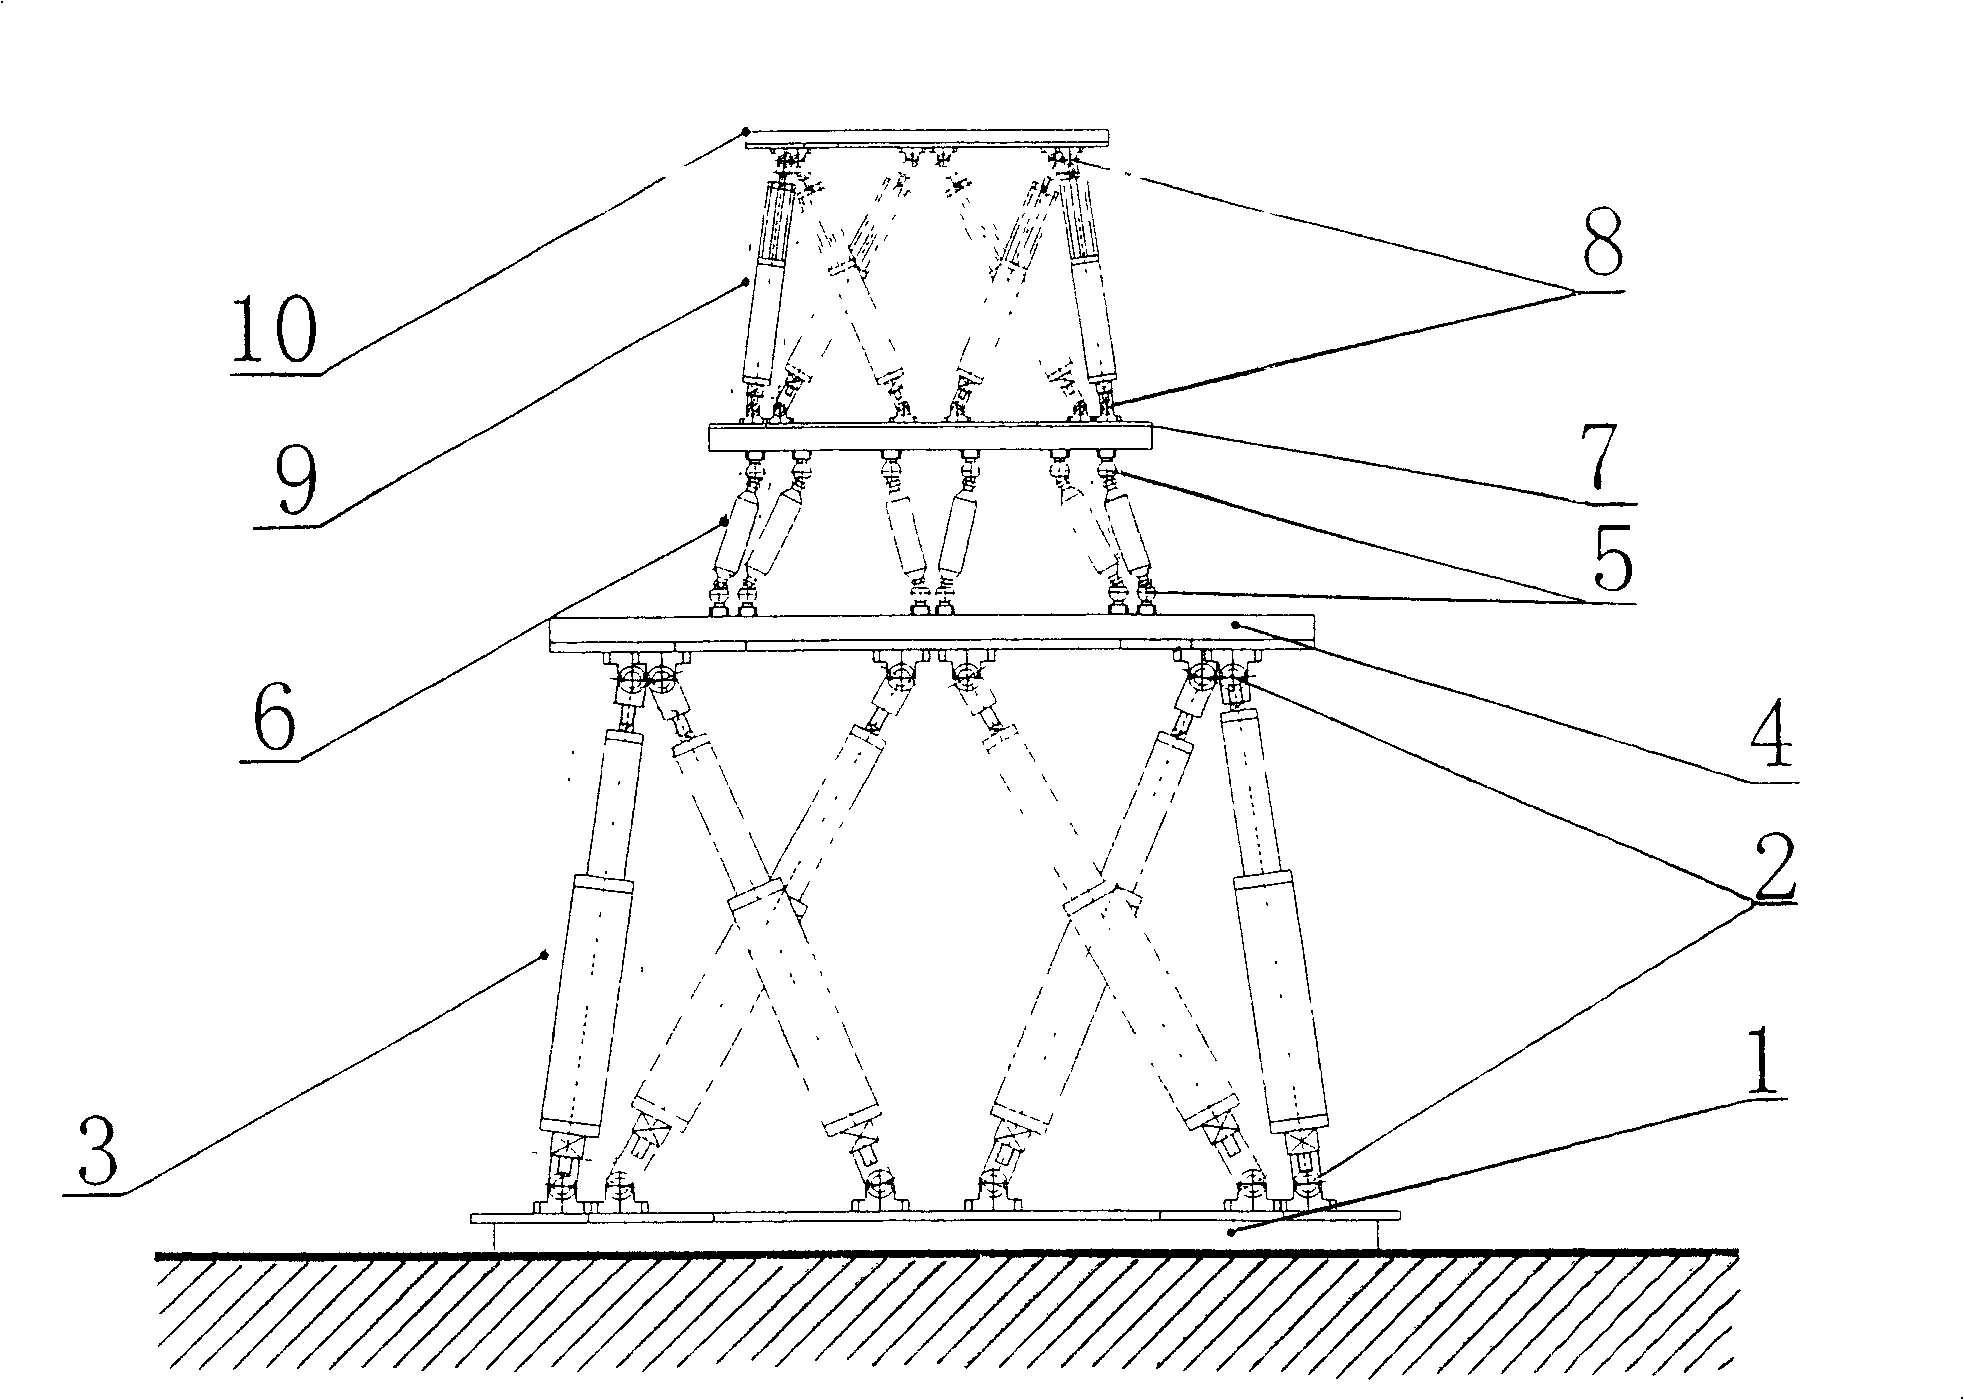 Master-slave mode two-in-parallel twelve degree of freedom generalized force adjustment loading mechanism